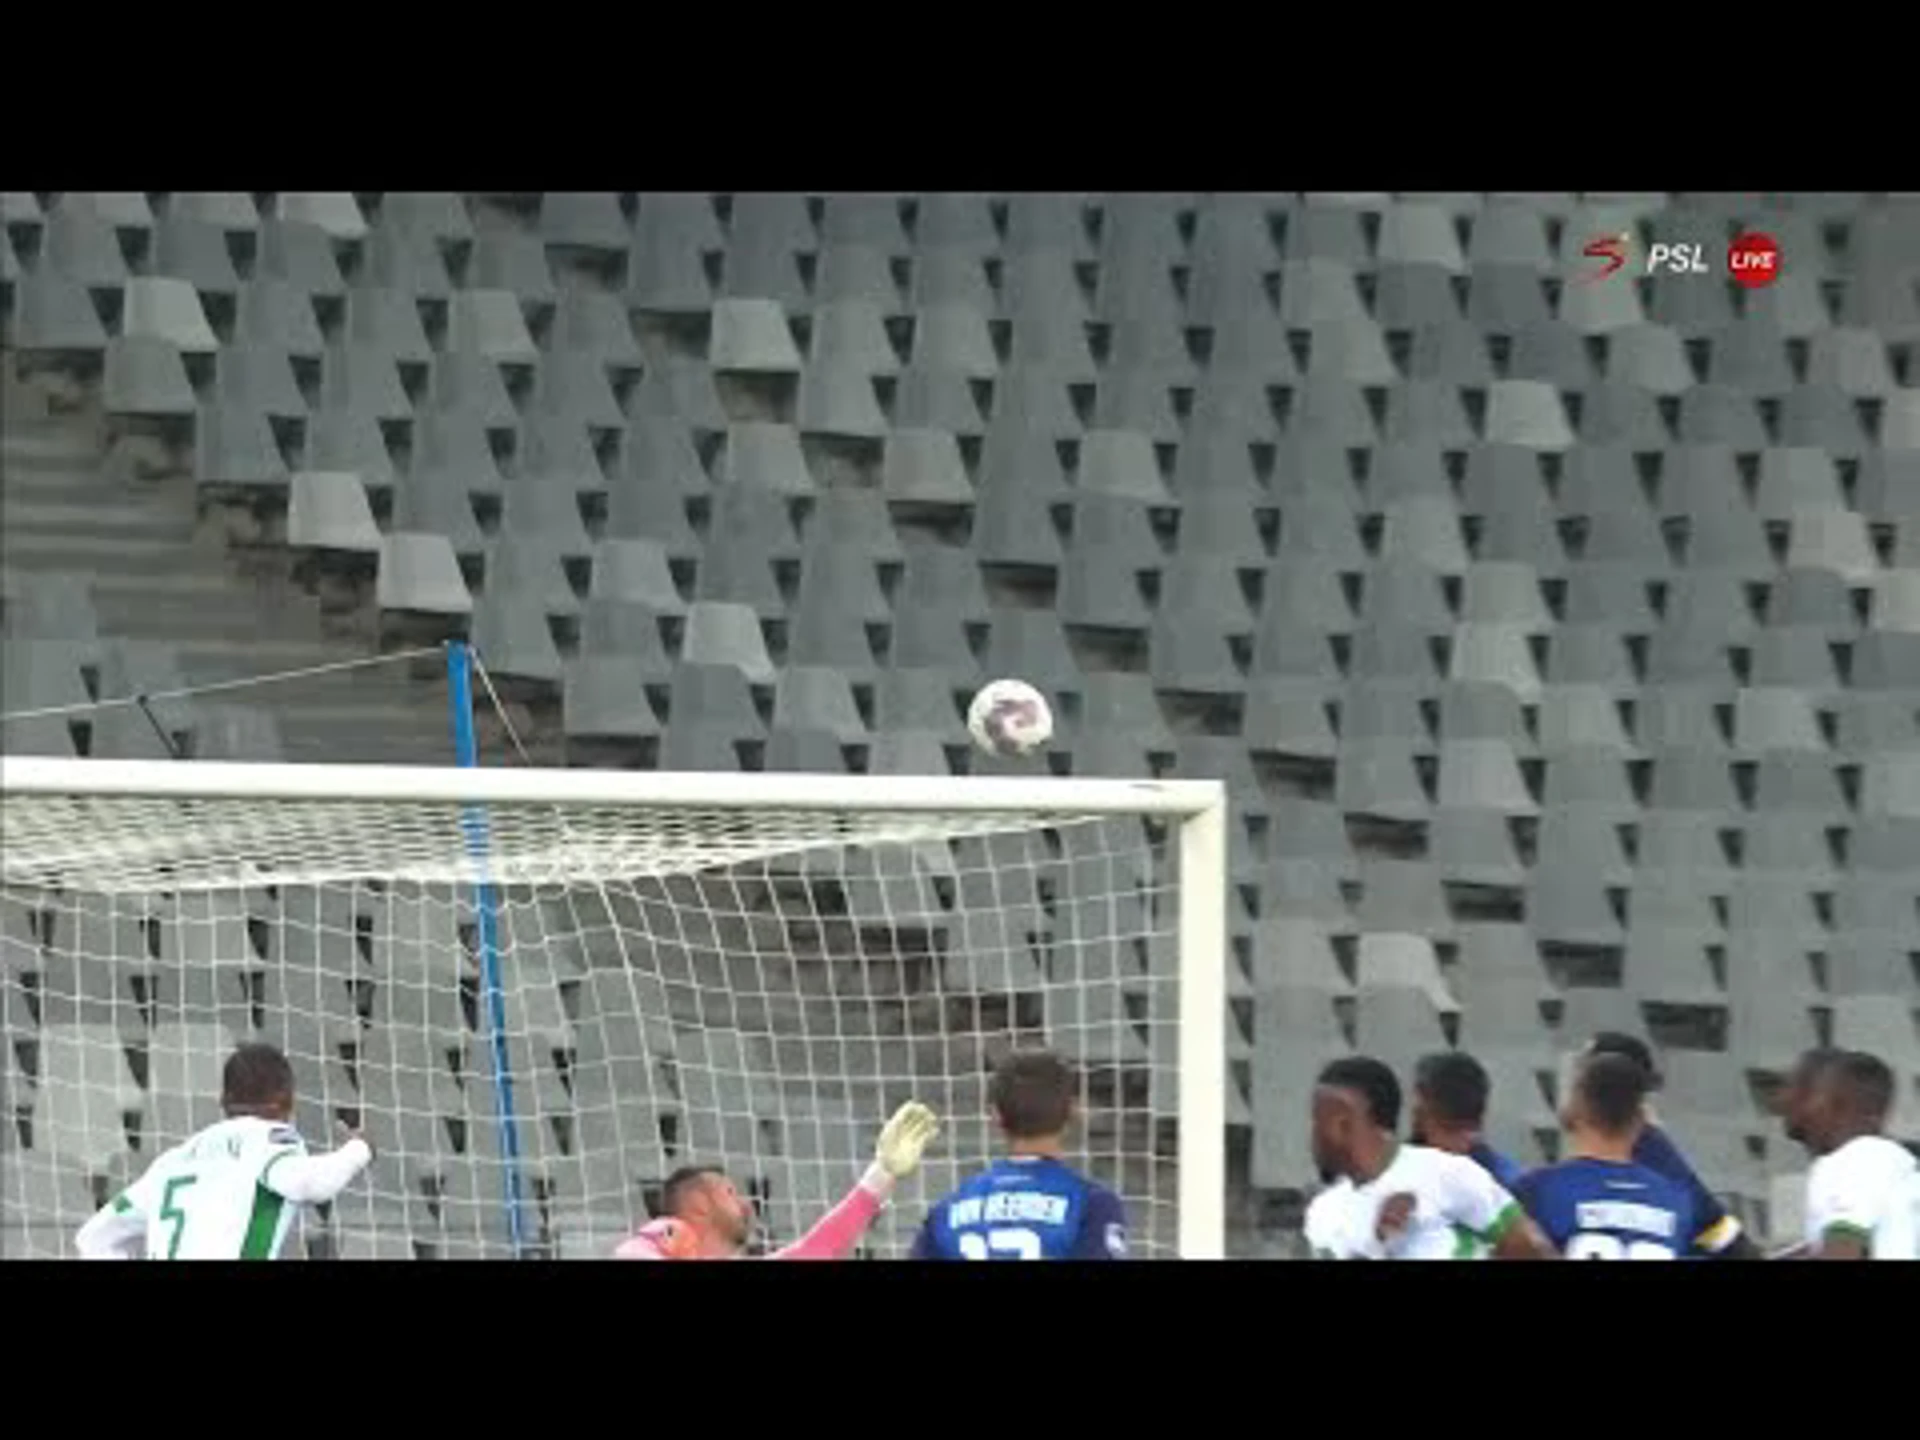 DStv Premiership | Cape Town City vs AmaZulu | Fourth Goal